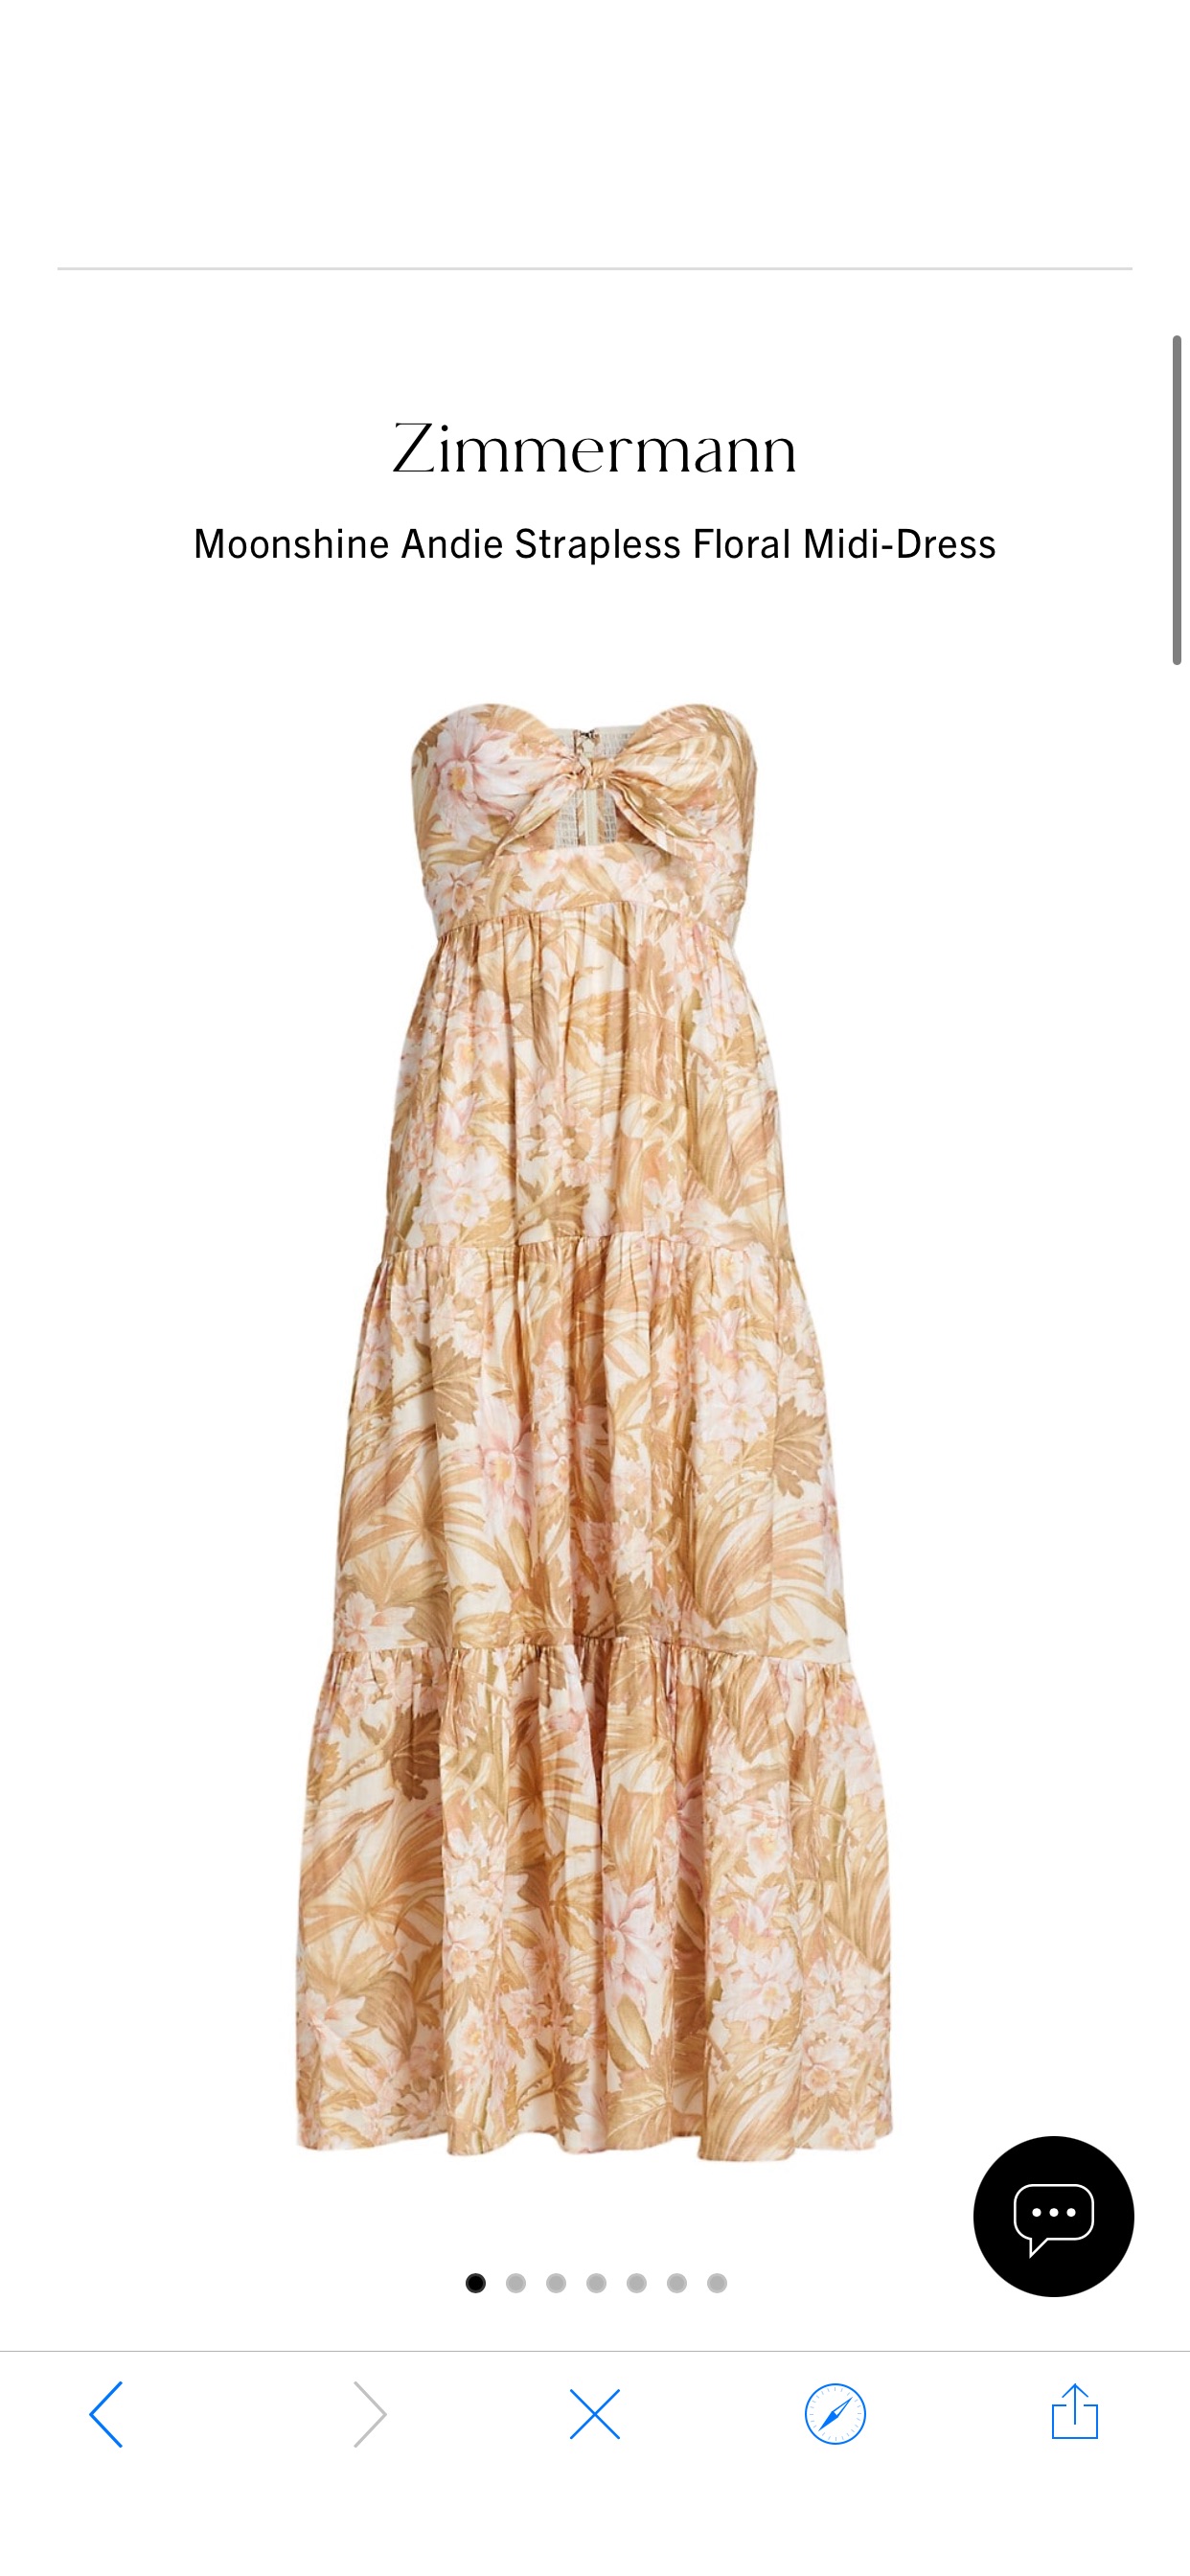 Shop Zimmermann Moonshine Andie Strapless Floral Midi-Dress | Saks Fifth Avenue
连衣裙